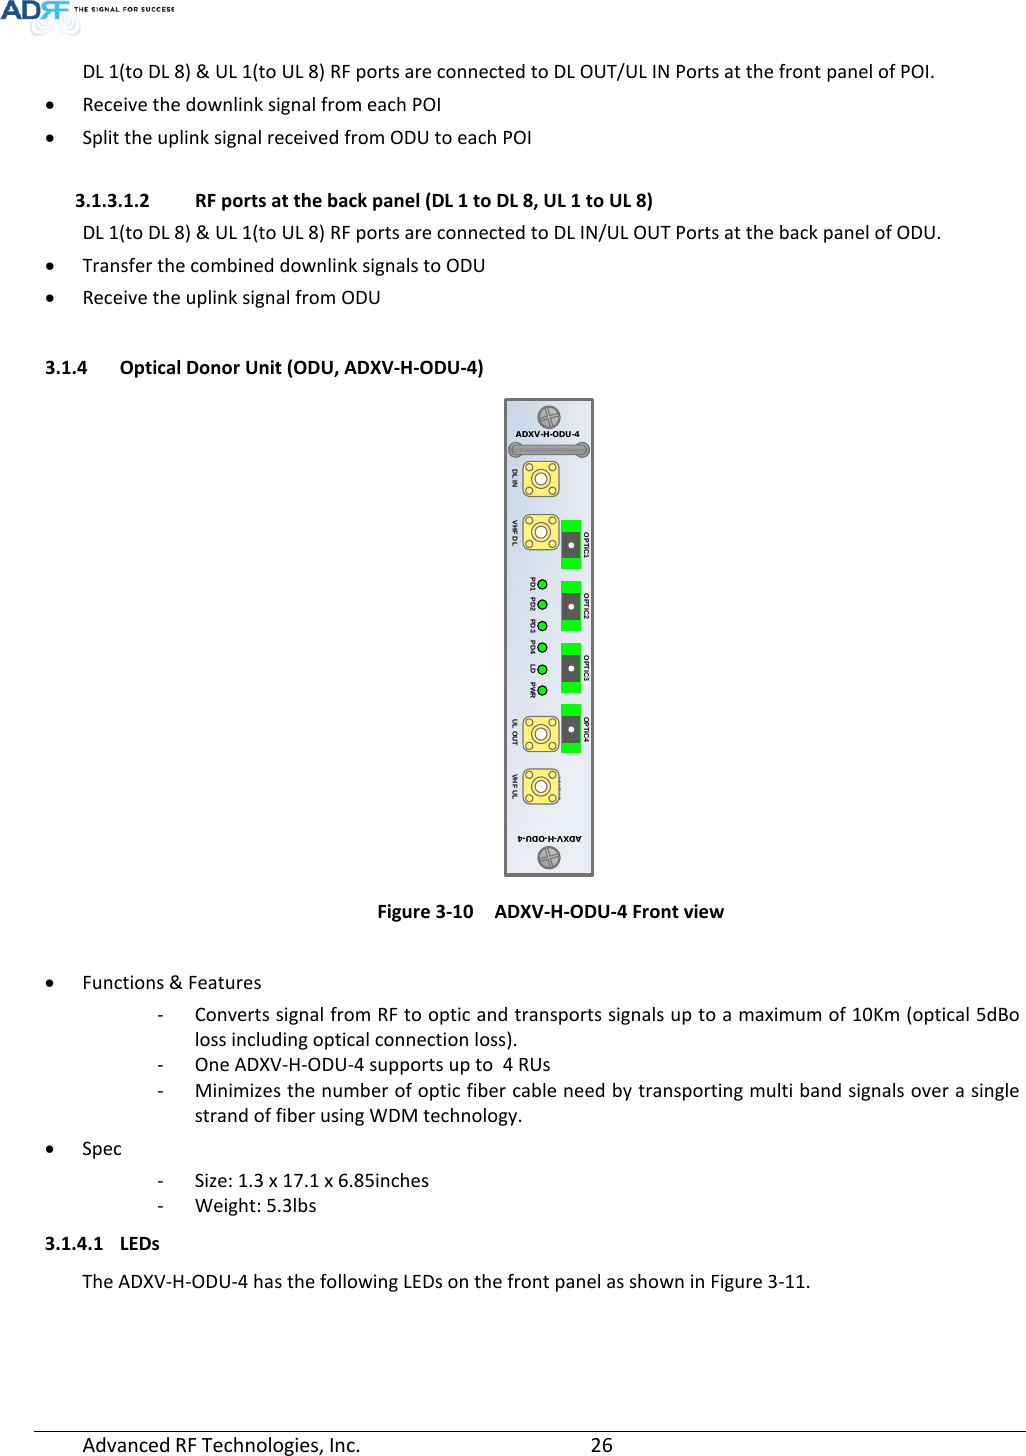 Page 26 of ADRF KOREA ADXV DAS(Distributed Antenna System) User Manual ADXV DAS